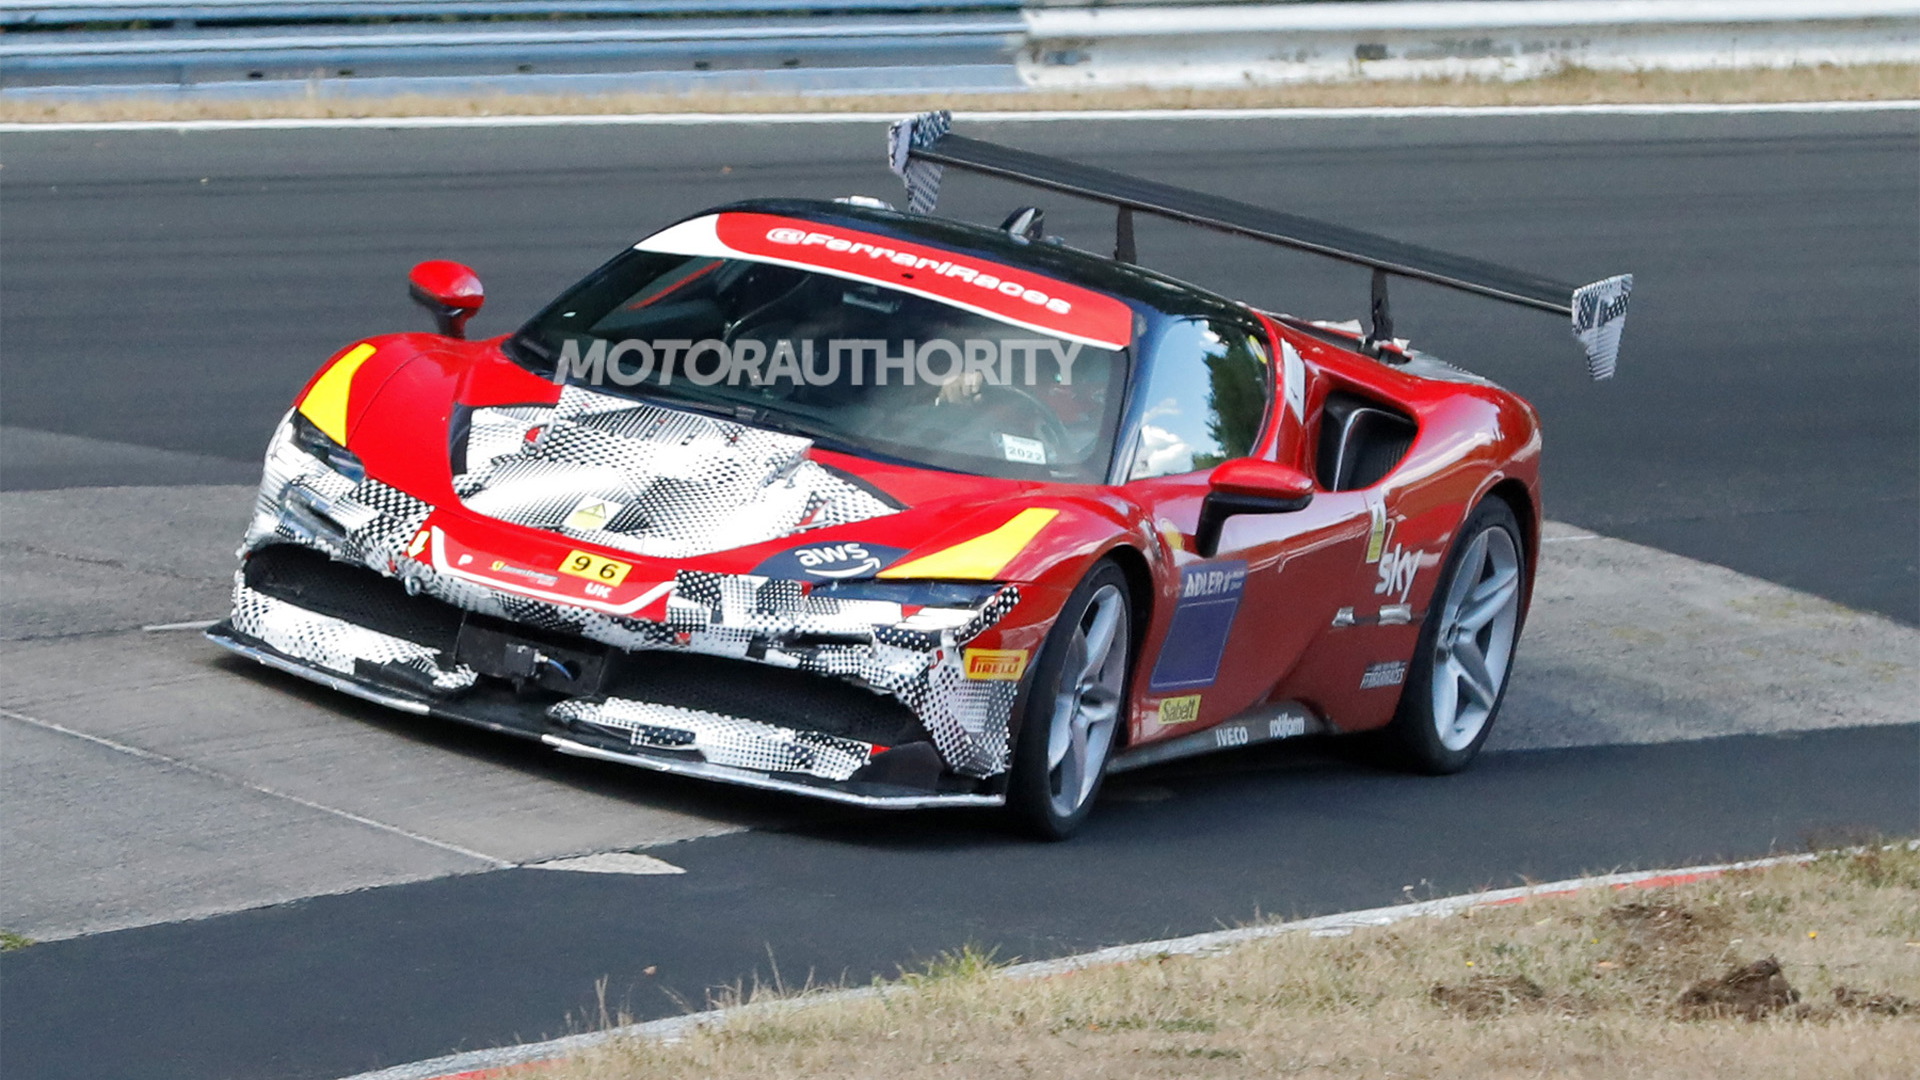 Ferrari SF90 Stradale race car spy shots - Photo credit: S. Baldauf/SB-Medien